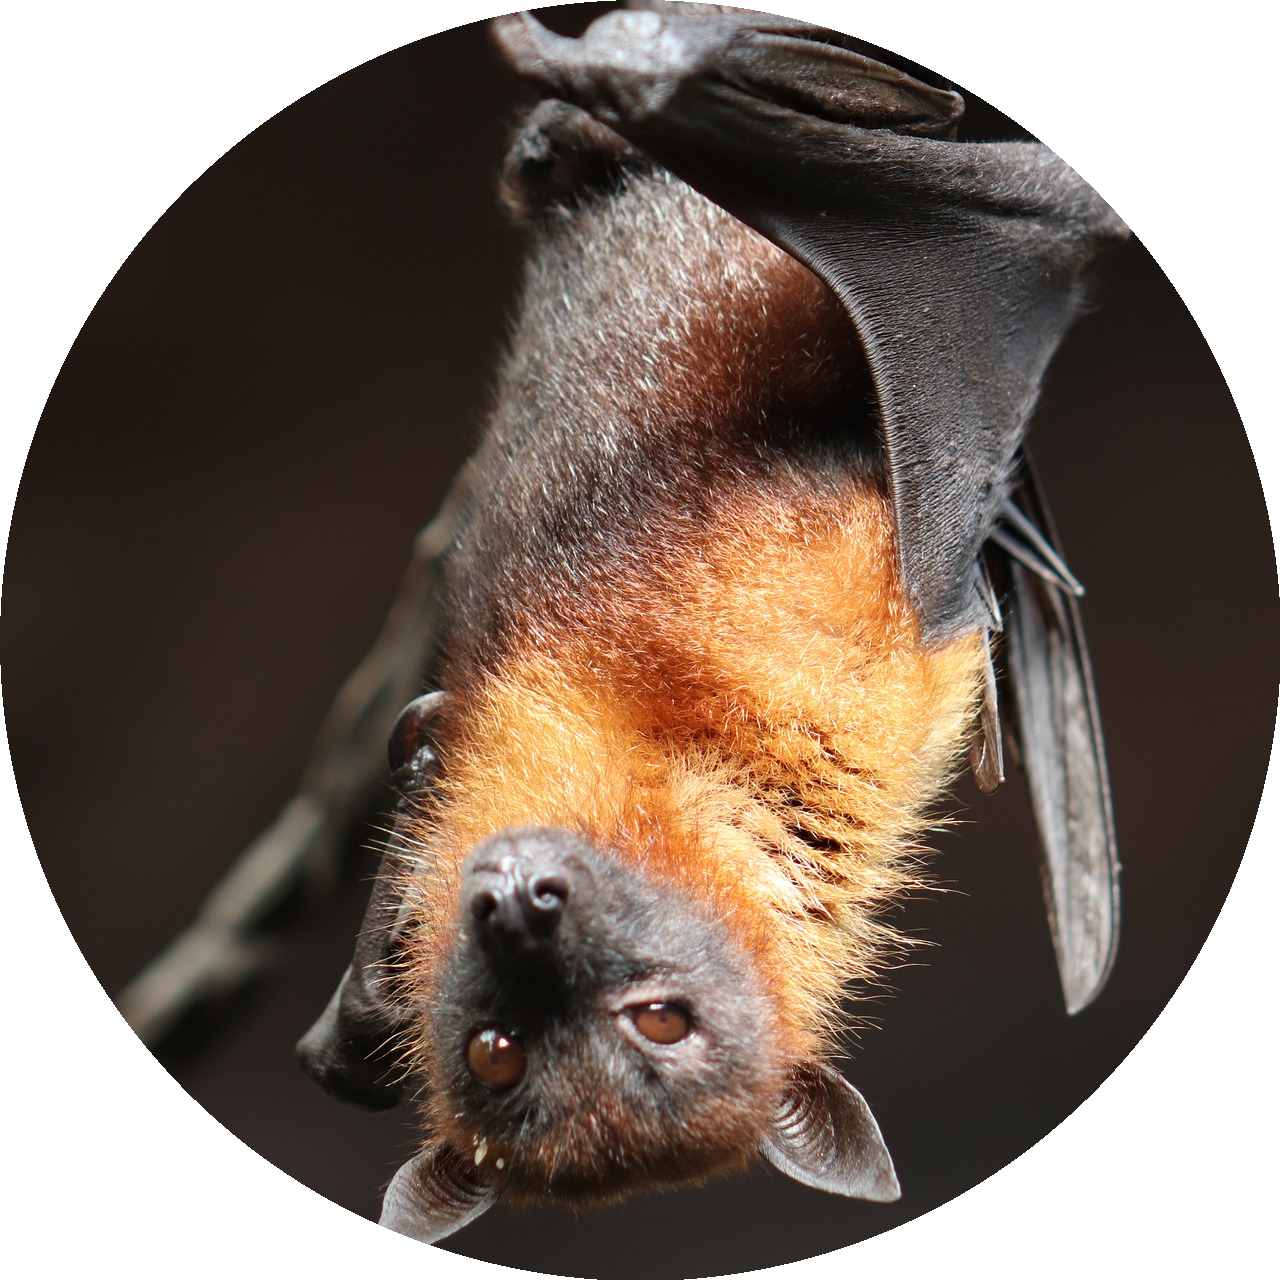 morcegos podem transmitir 
												coronavírus